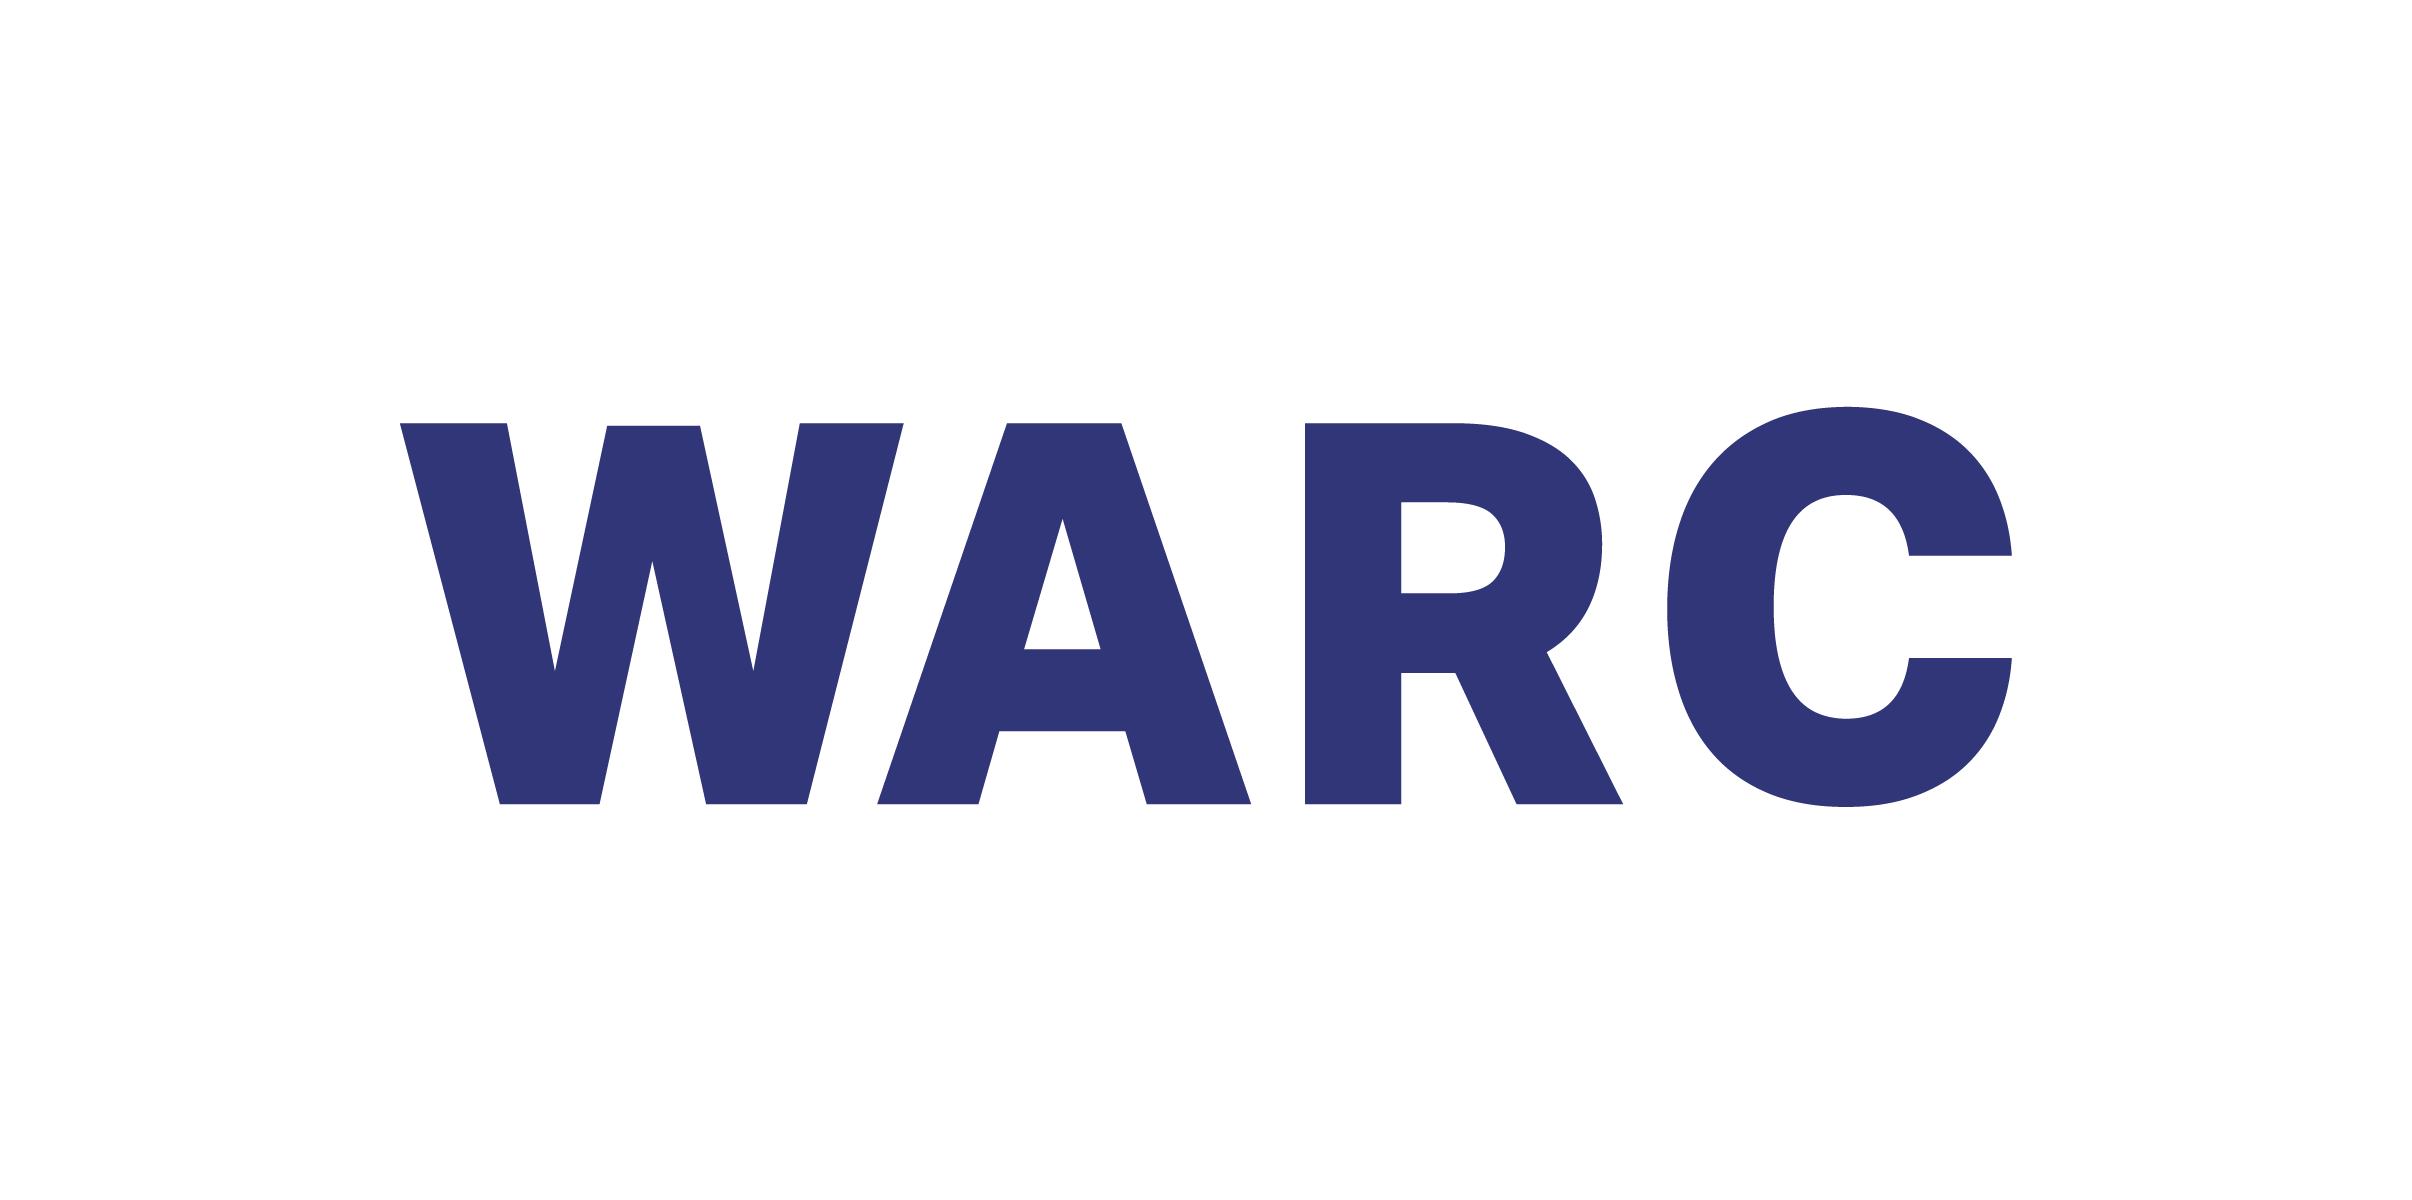 Clevertouch | WARC logo | Martech Marketo migrations case study